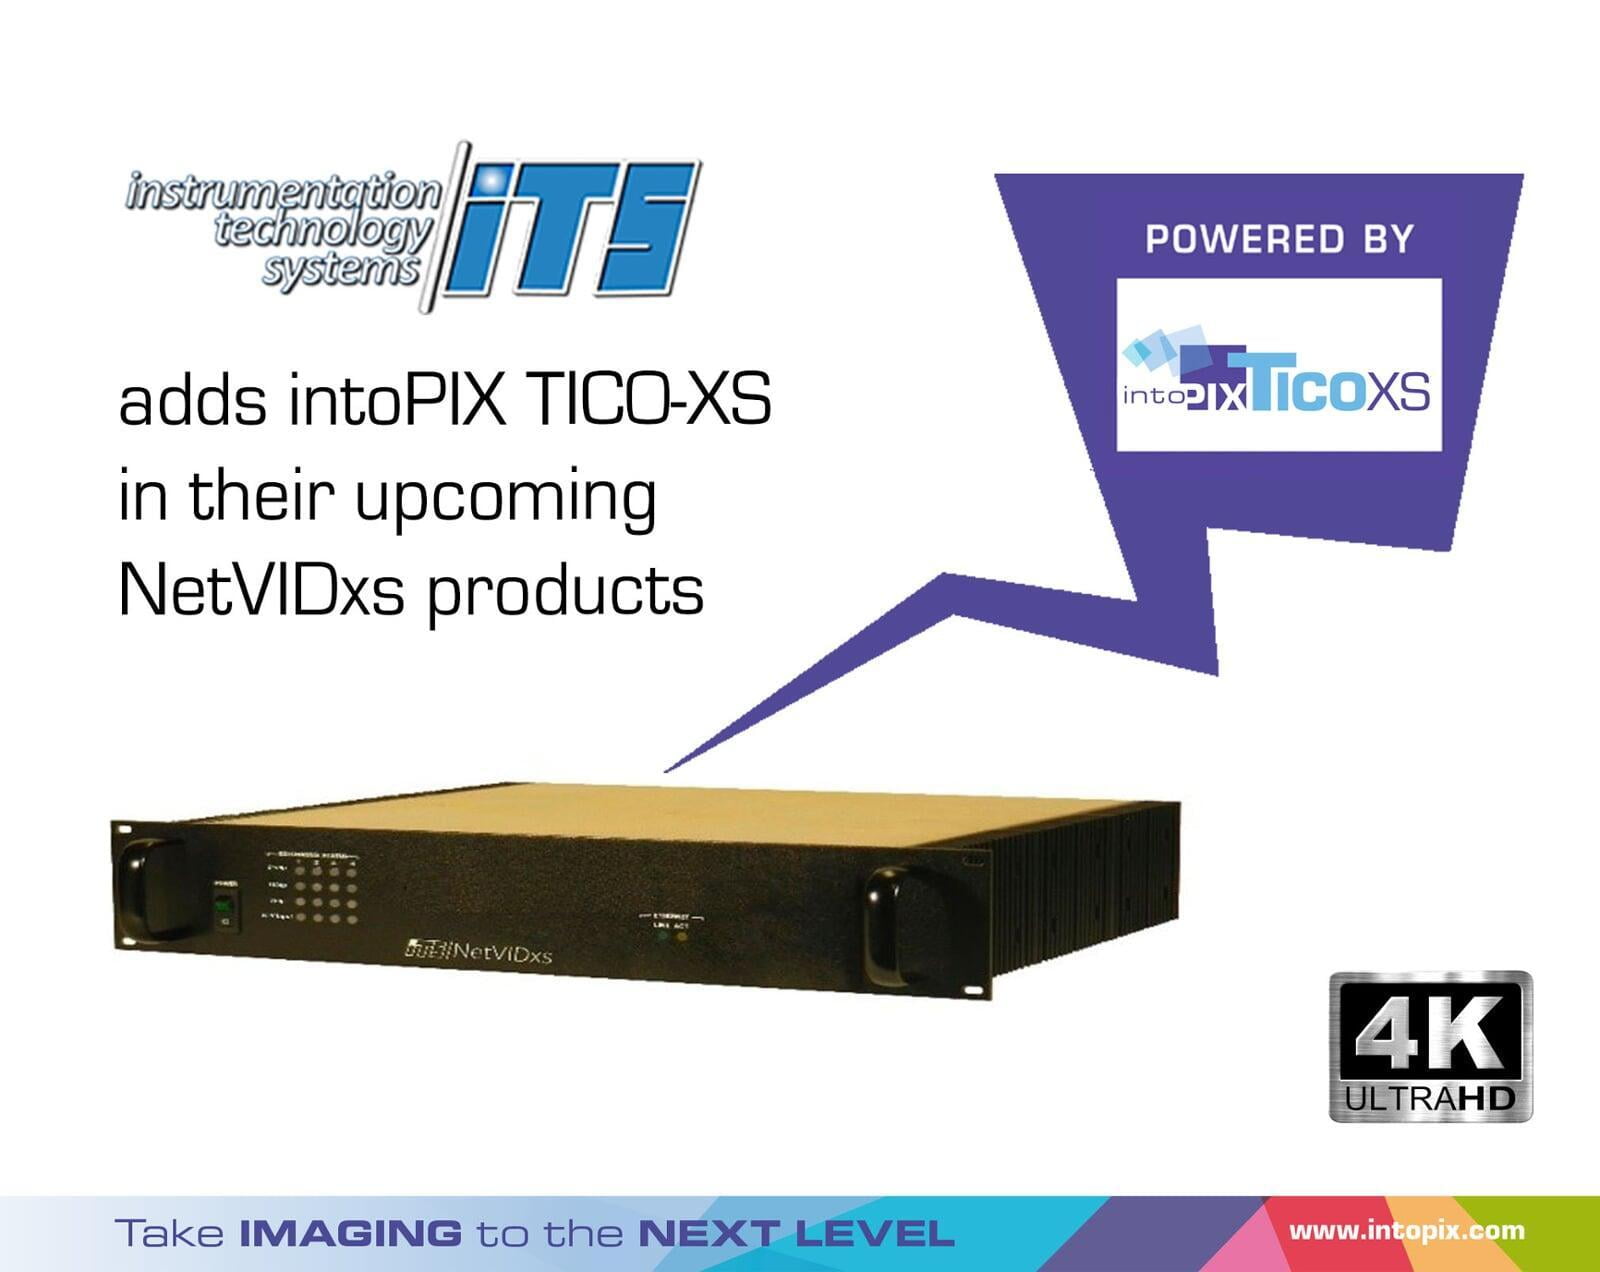 Instrumentation Technology Systems 将intoPIX TicoXS 加入其即将推出的 NetVIDxs 中